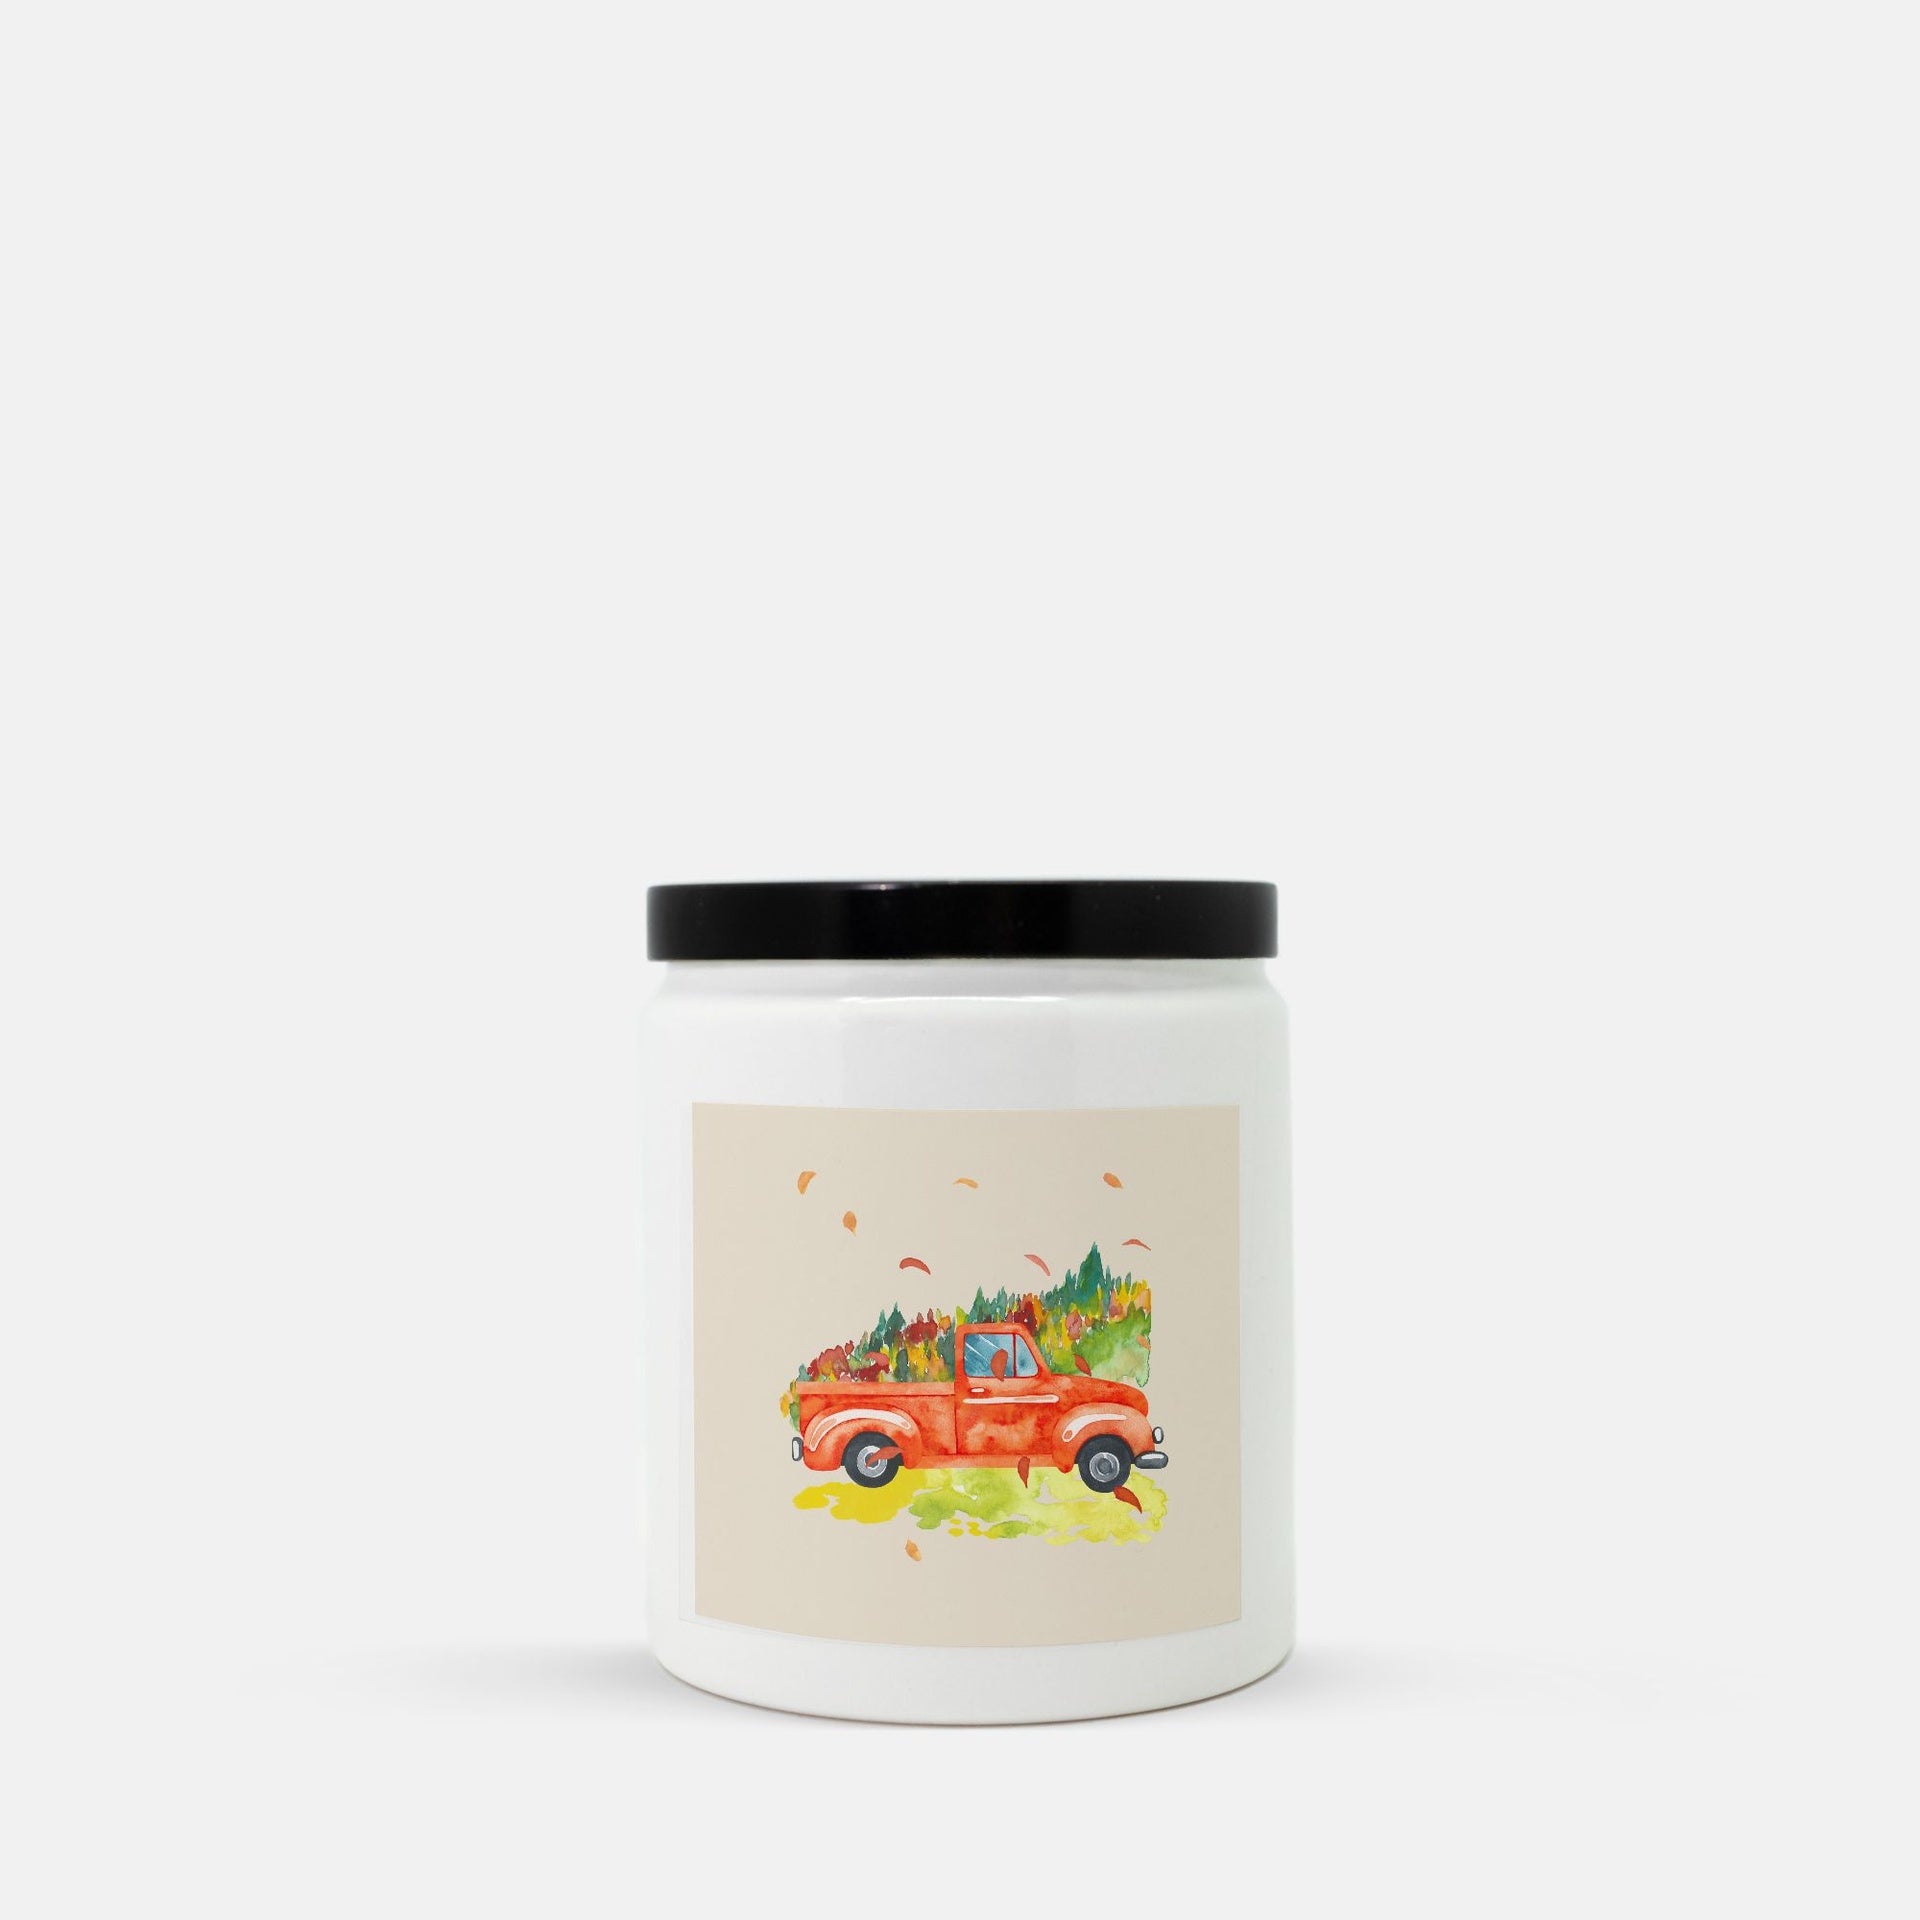 Orange Rustic Truck & Leaves Ceramic Candle w/ Black Lid - Vanilla Bean